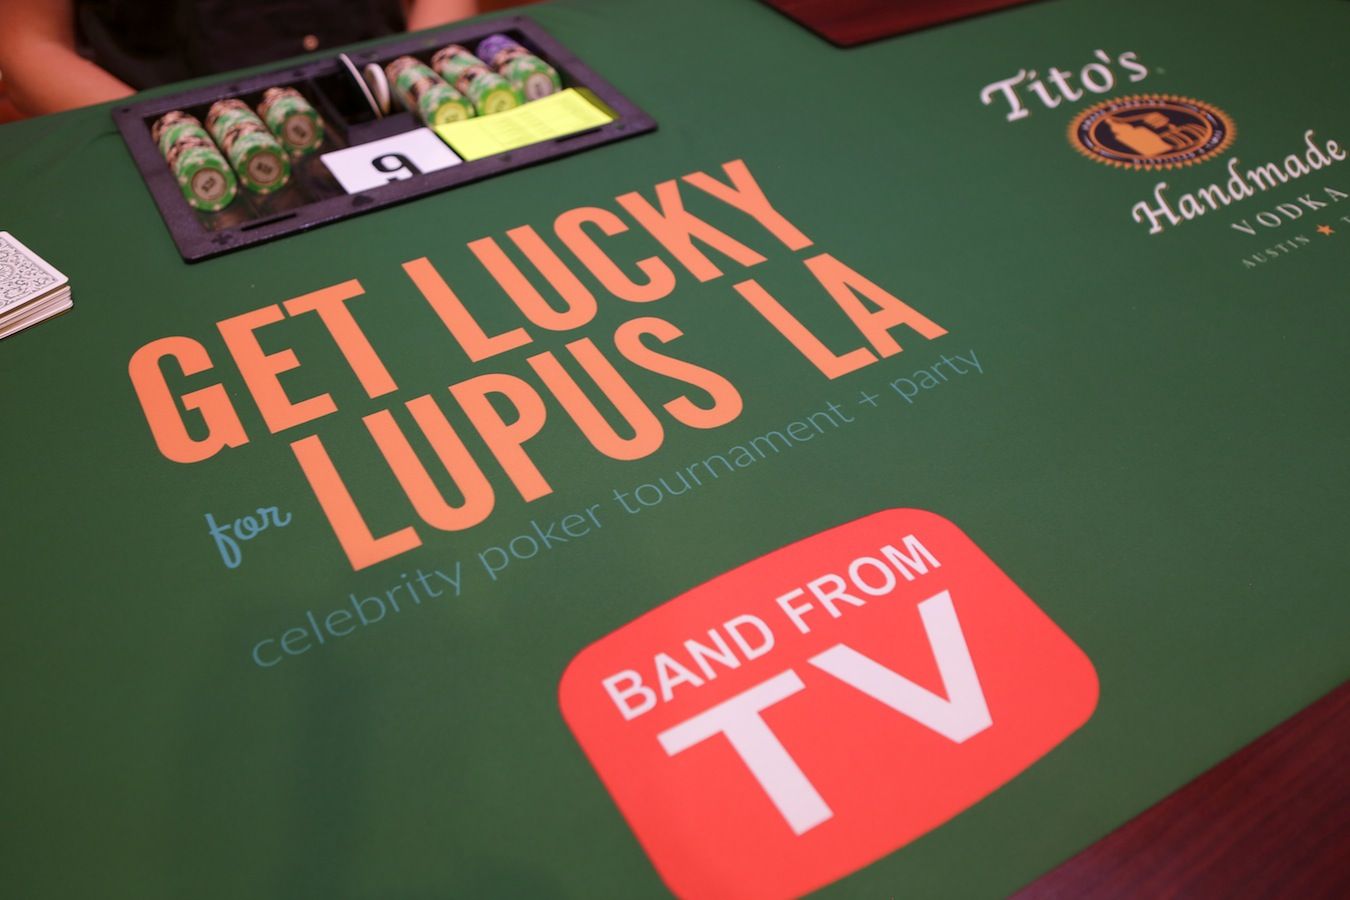 Get Lucky For Lupus LA Celebrity Poker Tournament.